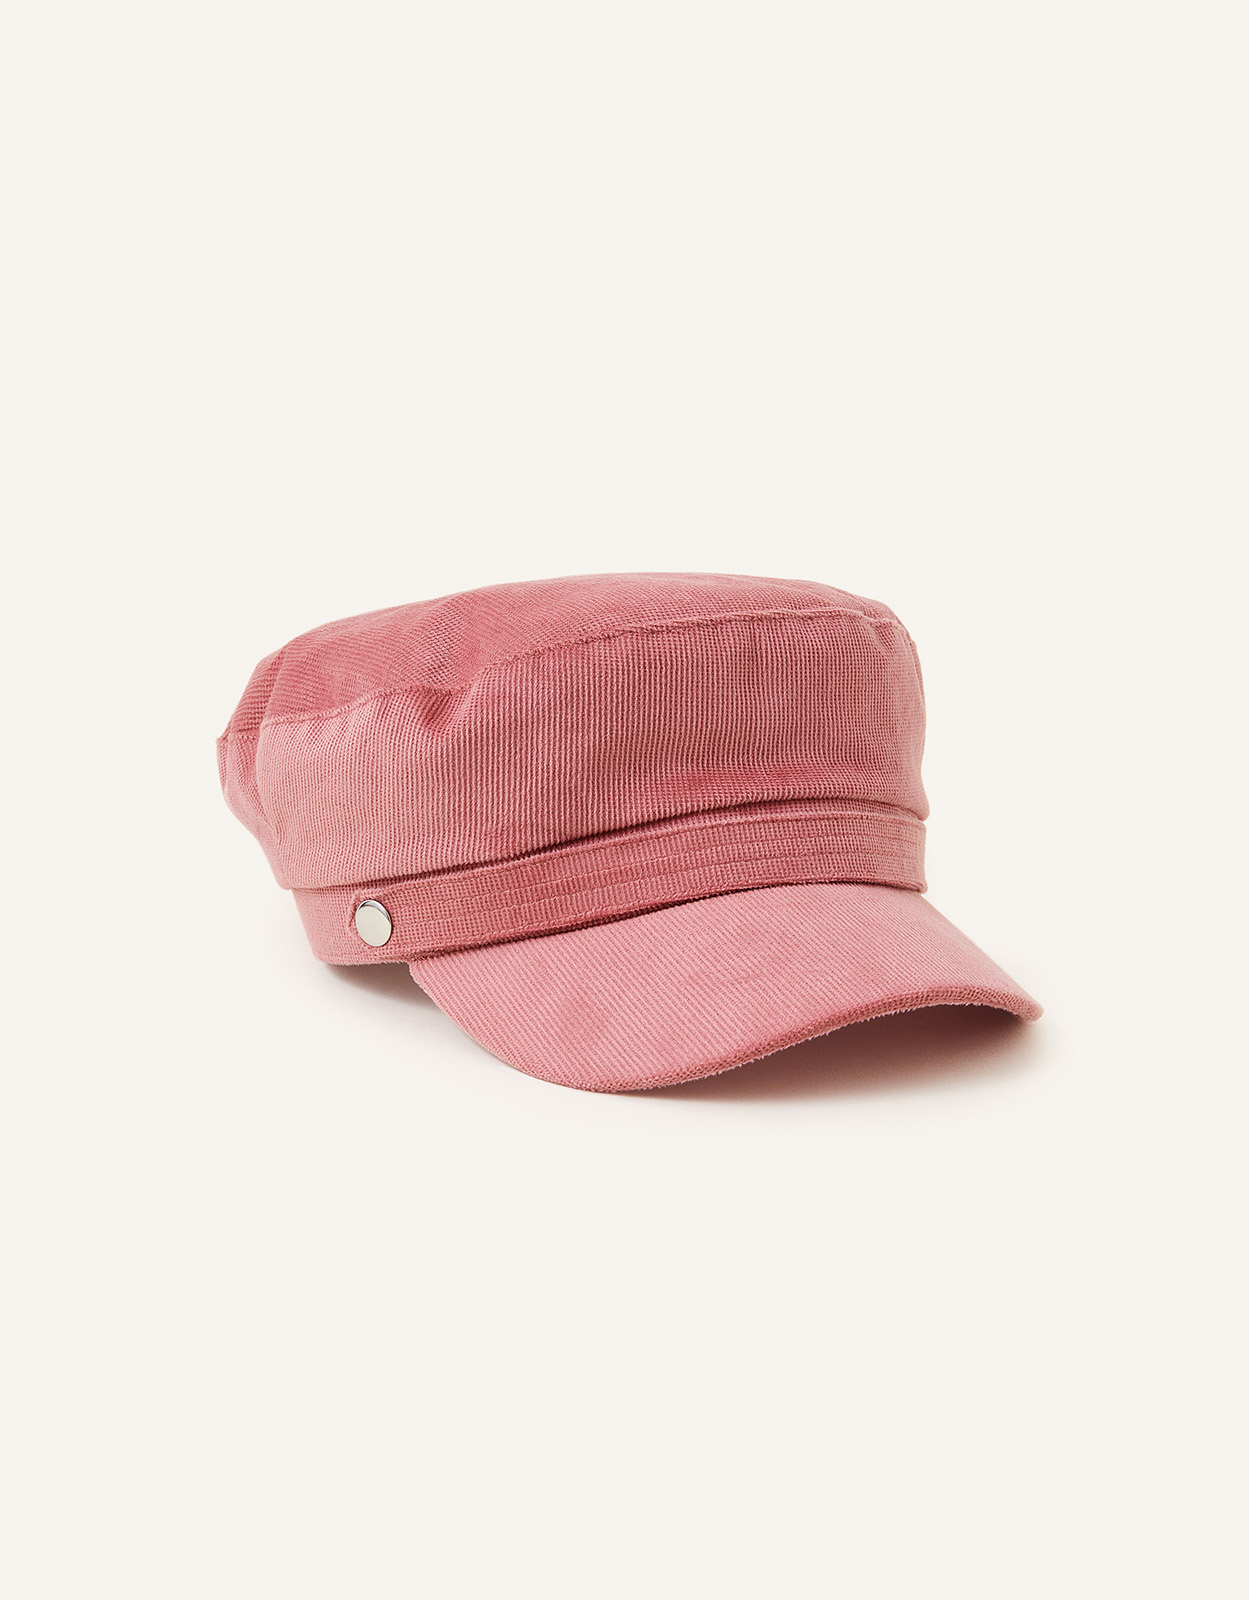 Accessorize Women's Cord Mariner Cap Pink